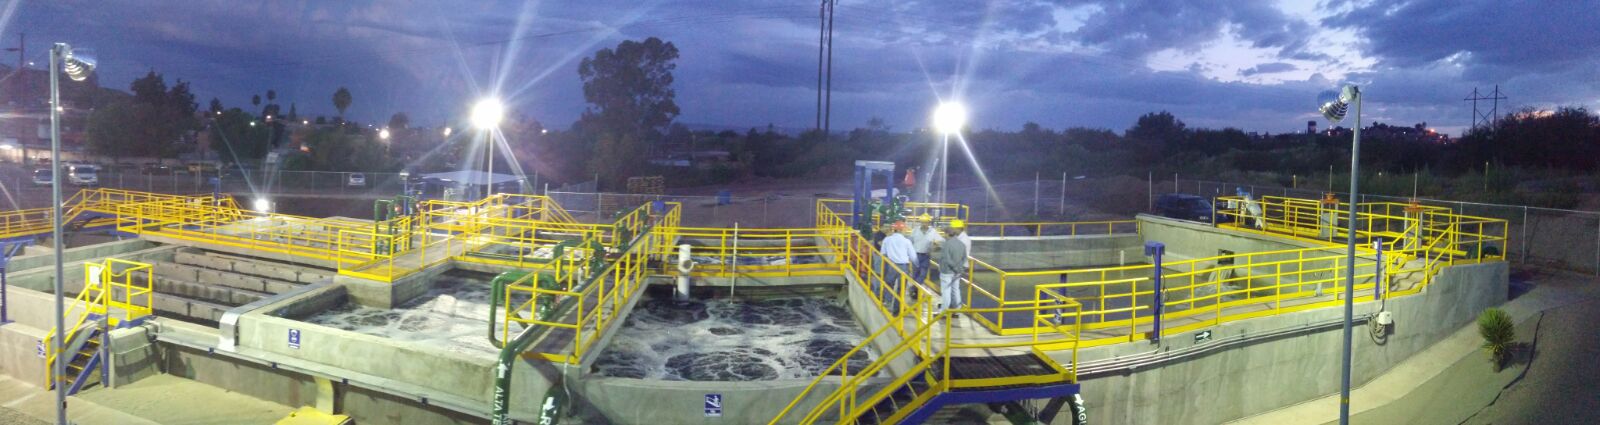 Durango wastewater treatment facility uses Israeli technology solutions. Photo courtesy